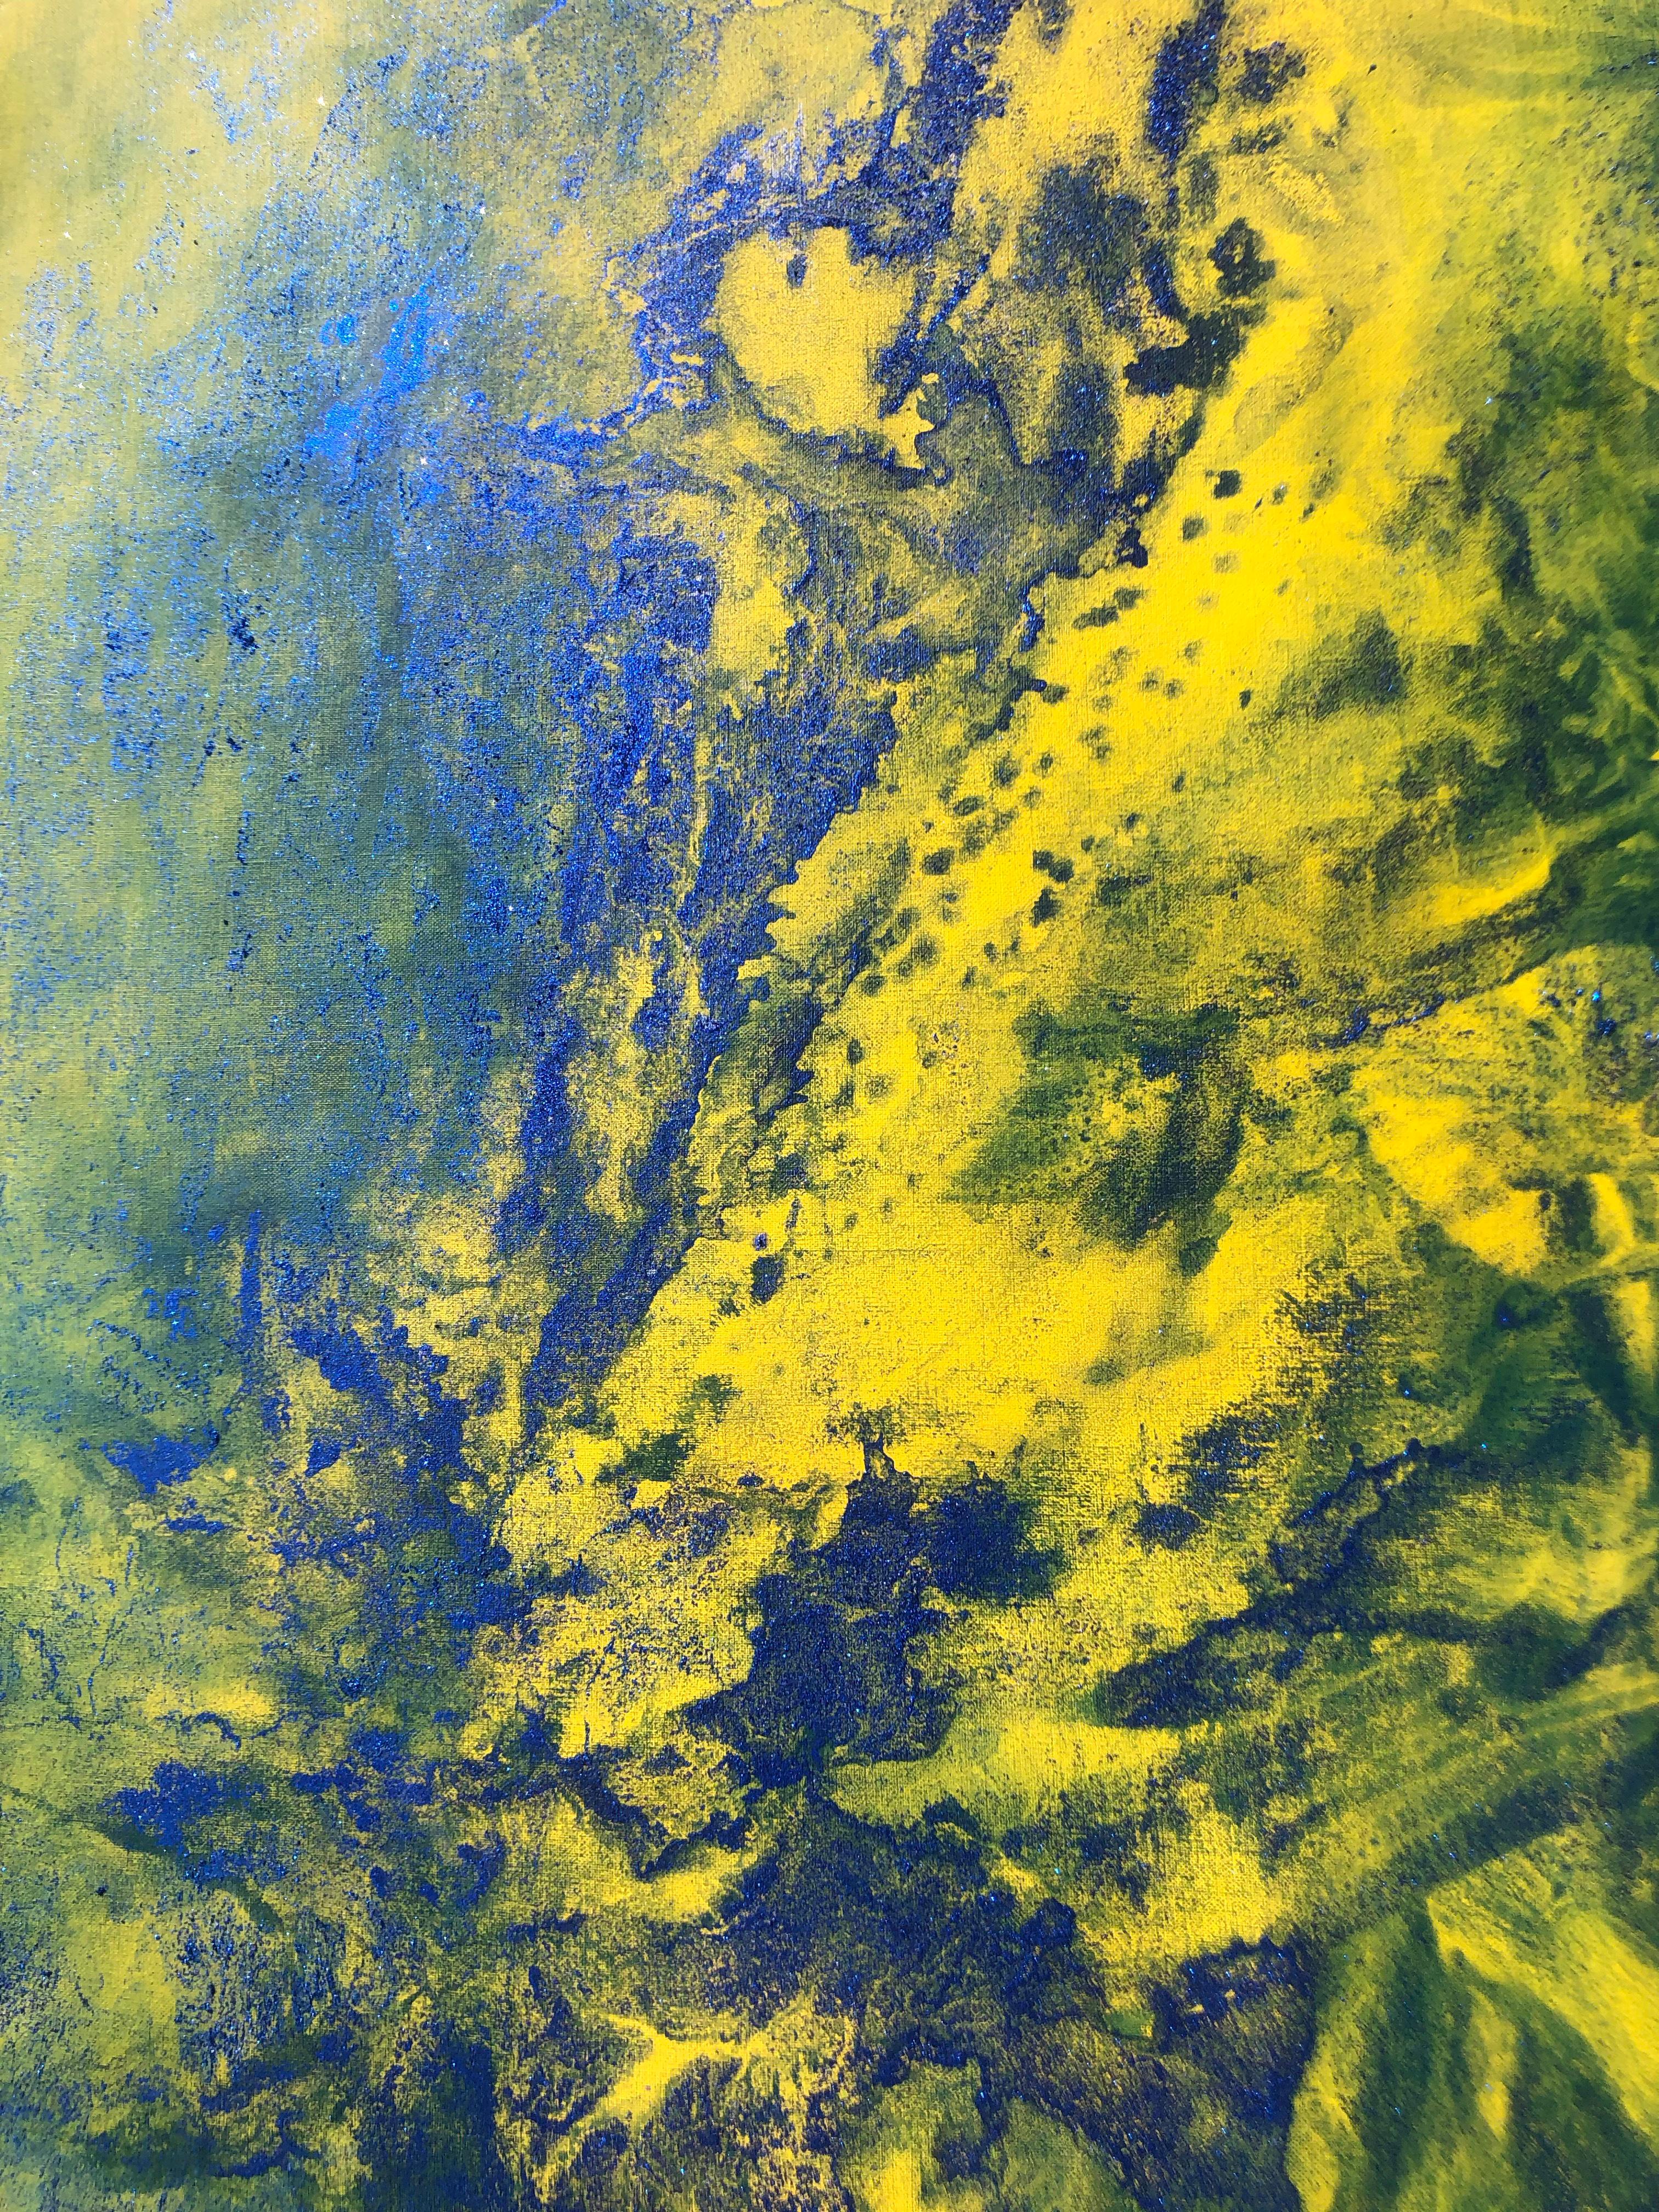 Contemporary art - 21st century painting on linen canvas - Blue, yellow, waves (Blau), Interior Painting, von Volodymyr Zayichenko